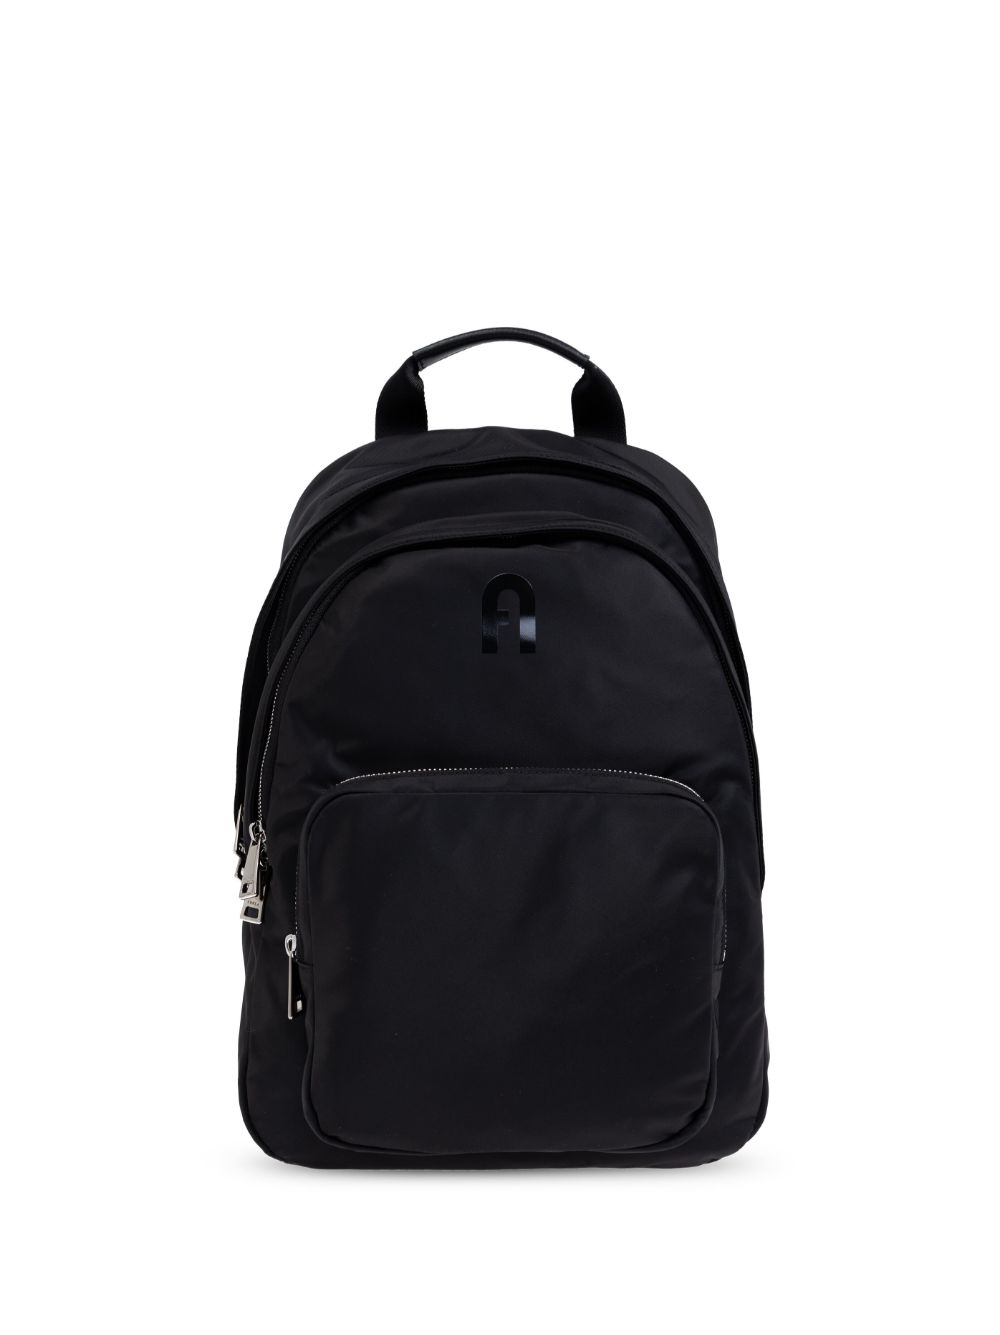 Furla black backpack von Furla